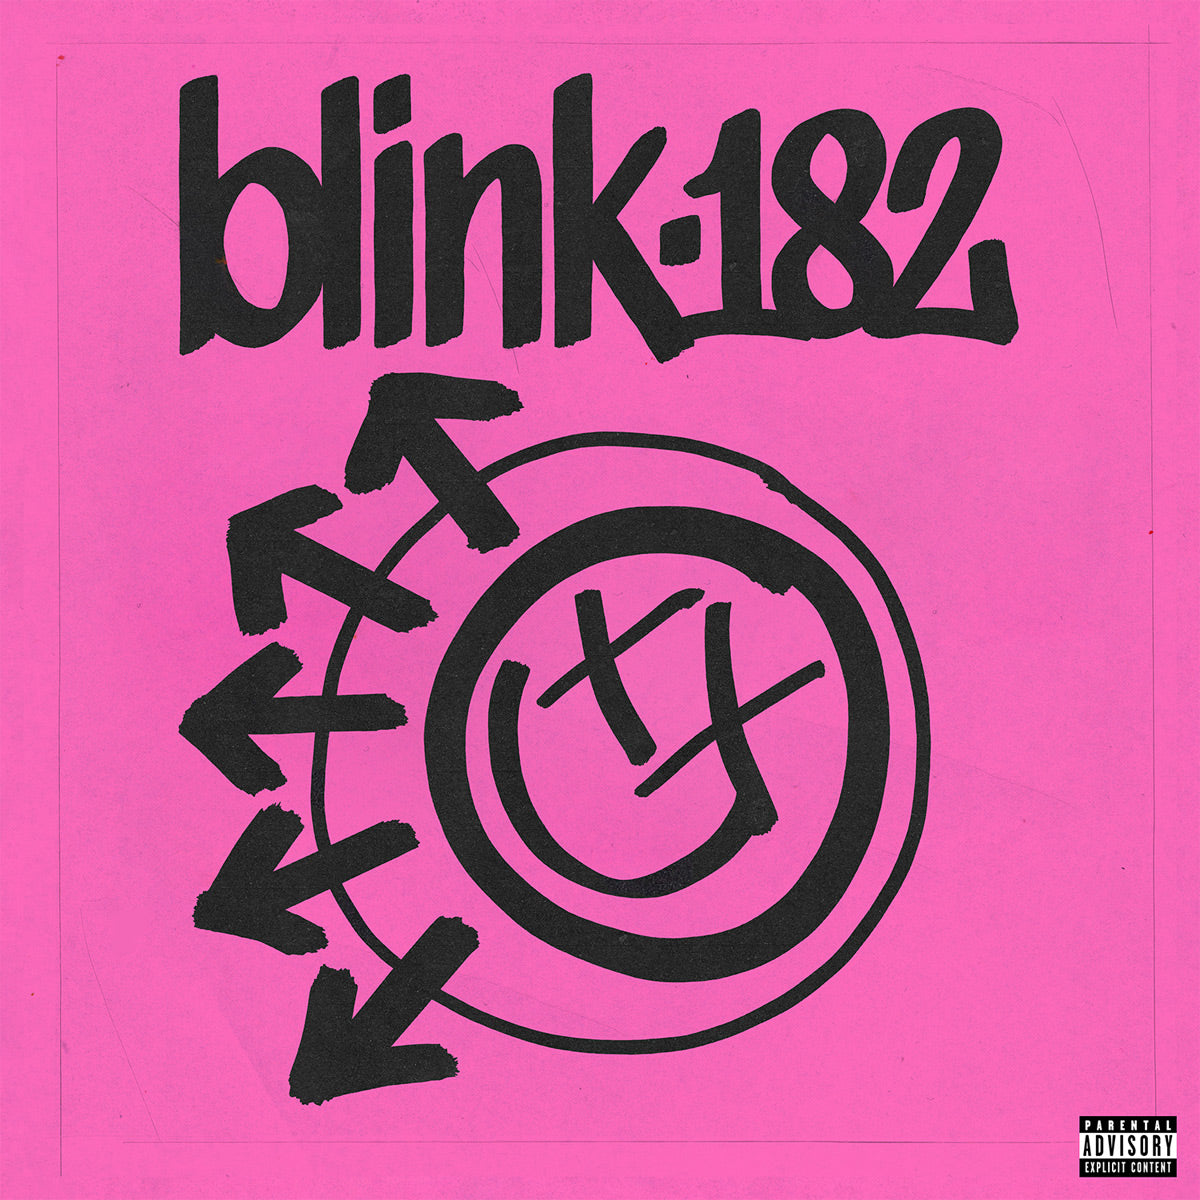 Vinyl – blink-182 UK/EU